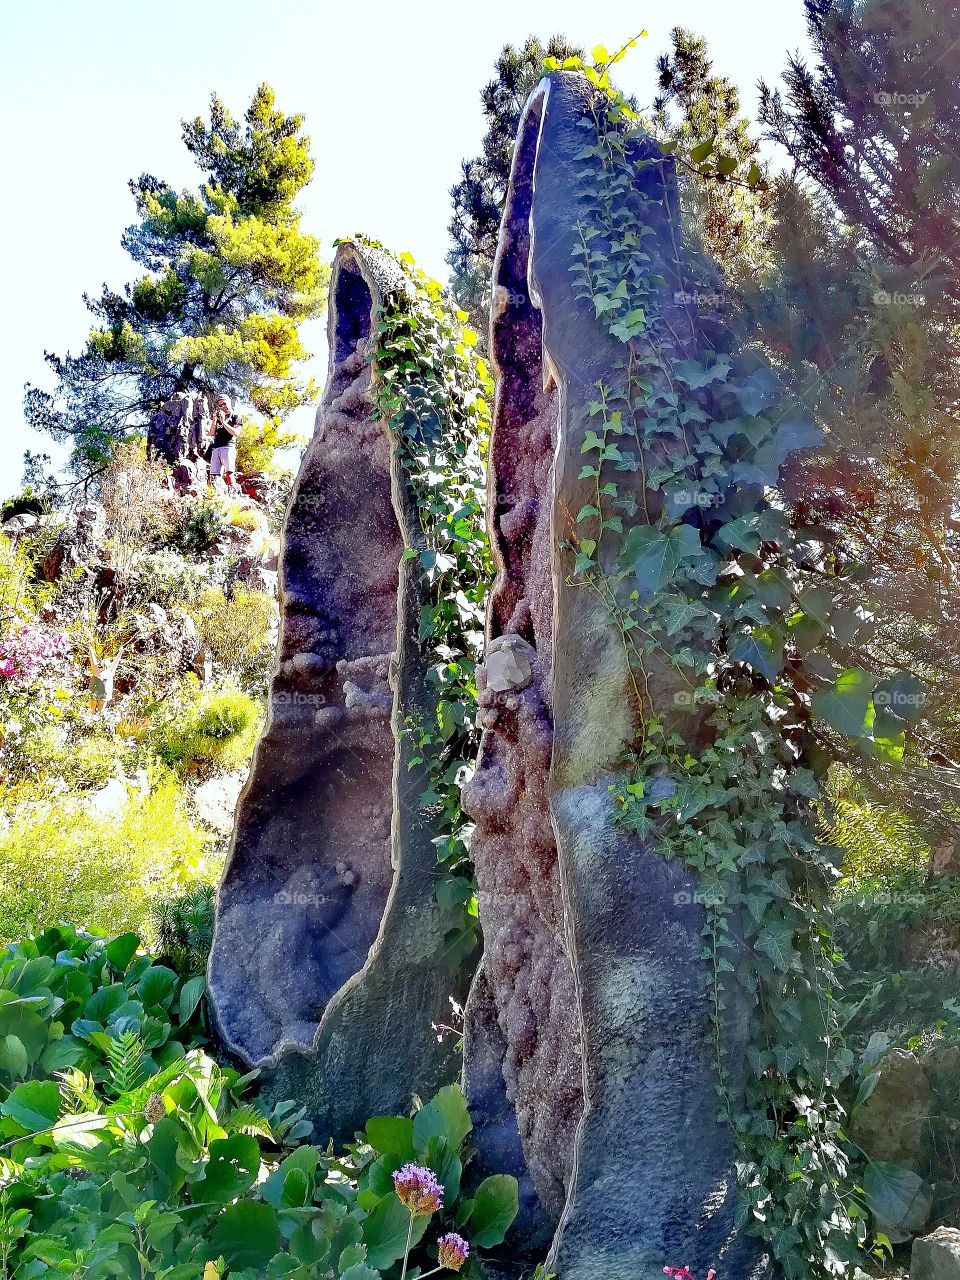 Rocks in the garden